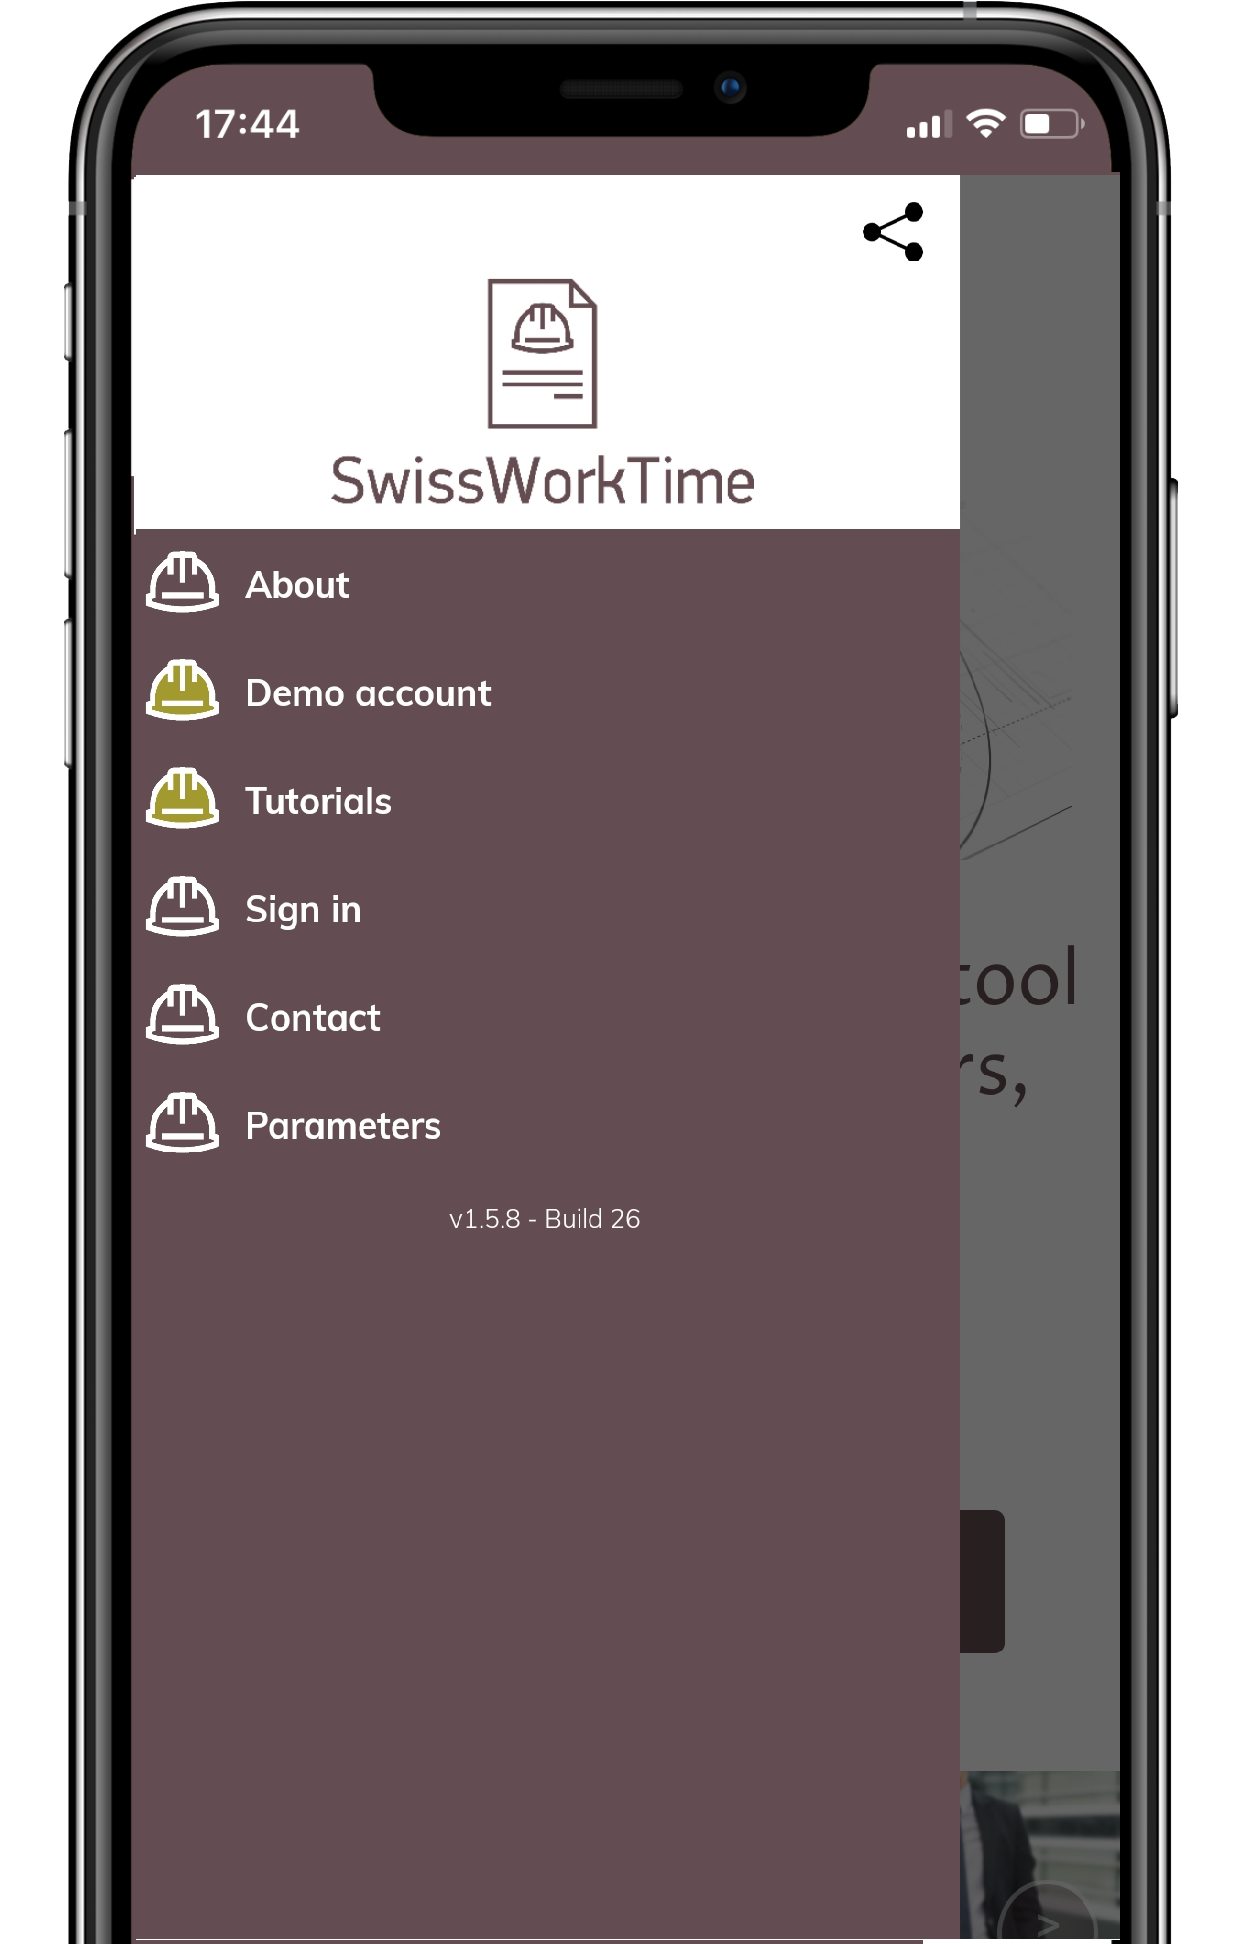 SwissWorkTime menu application